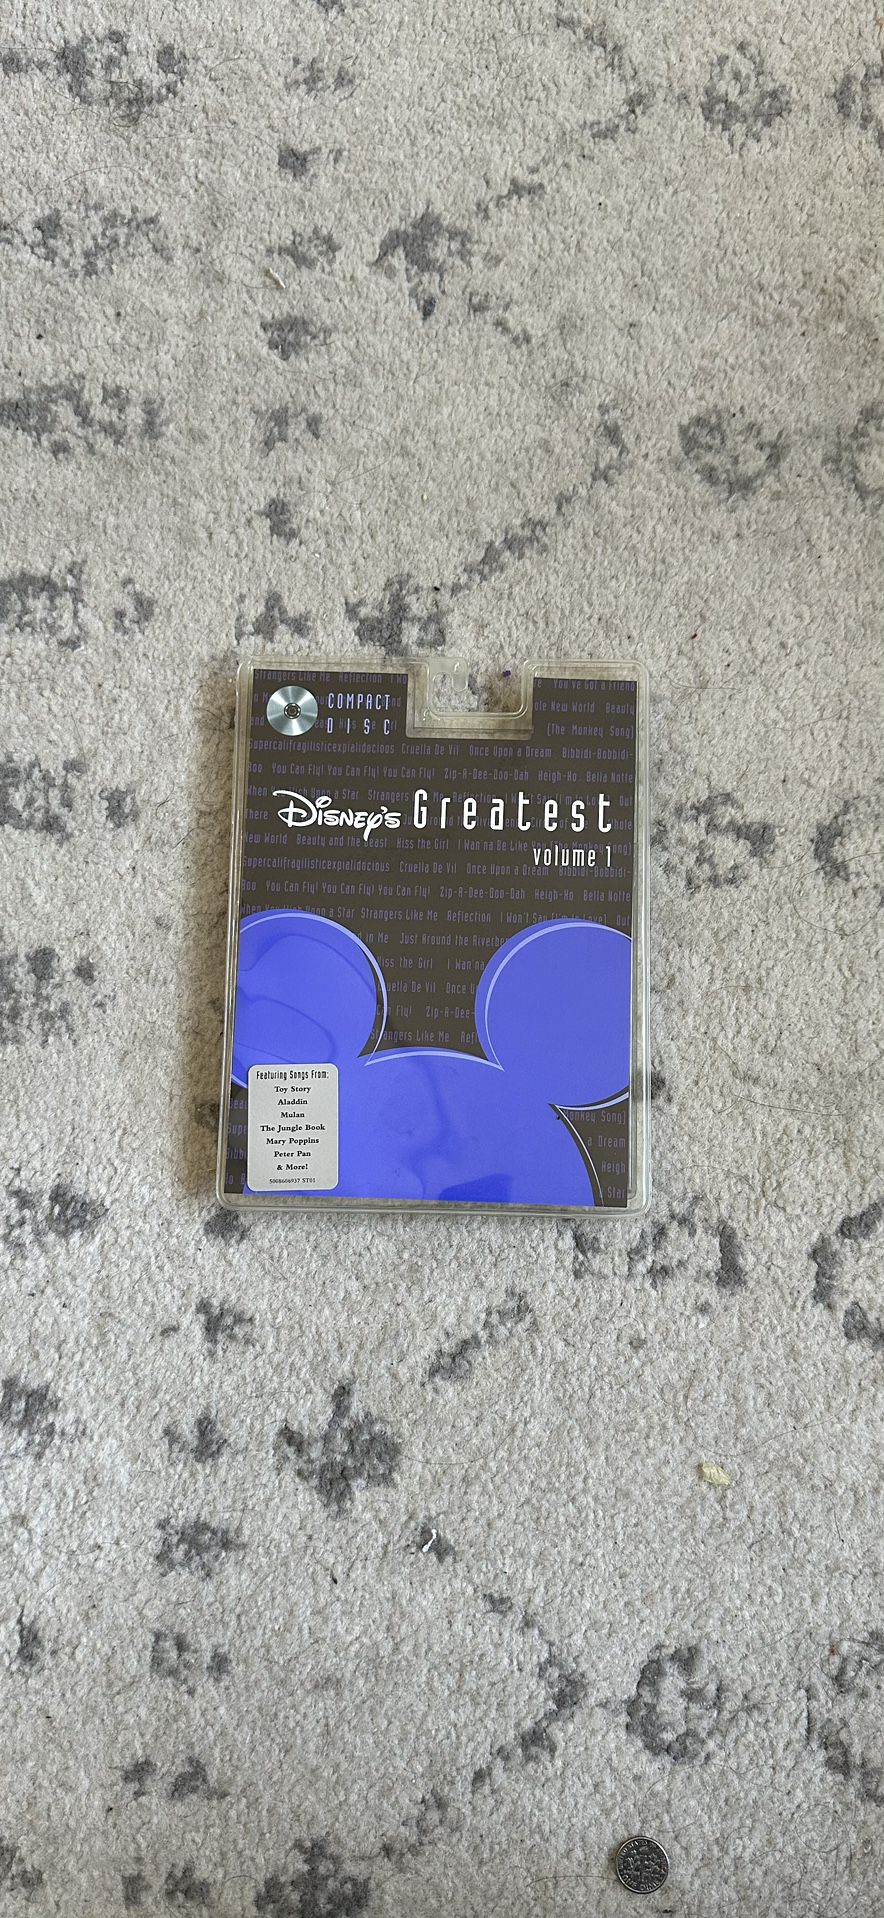 Disney's Greatest Vol. 1 by Disney CD 2001 Blister Pk  New & Sealed